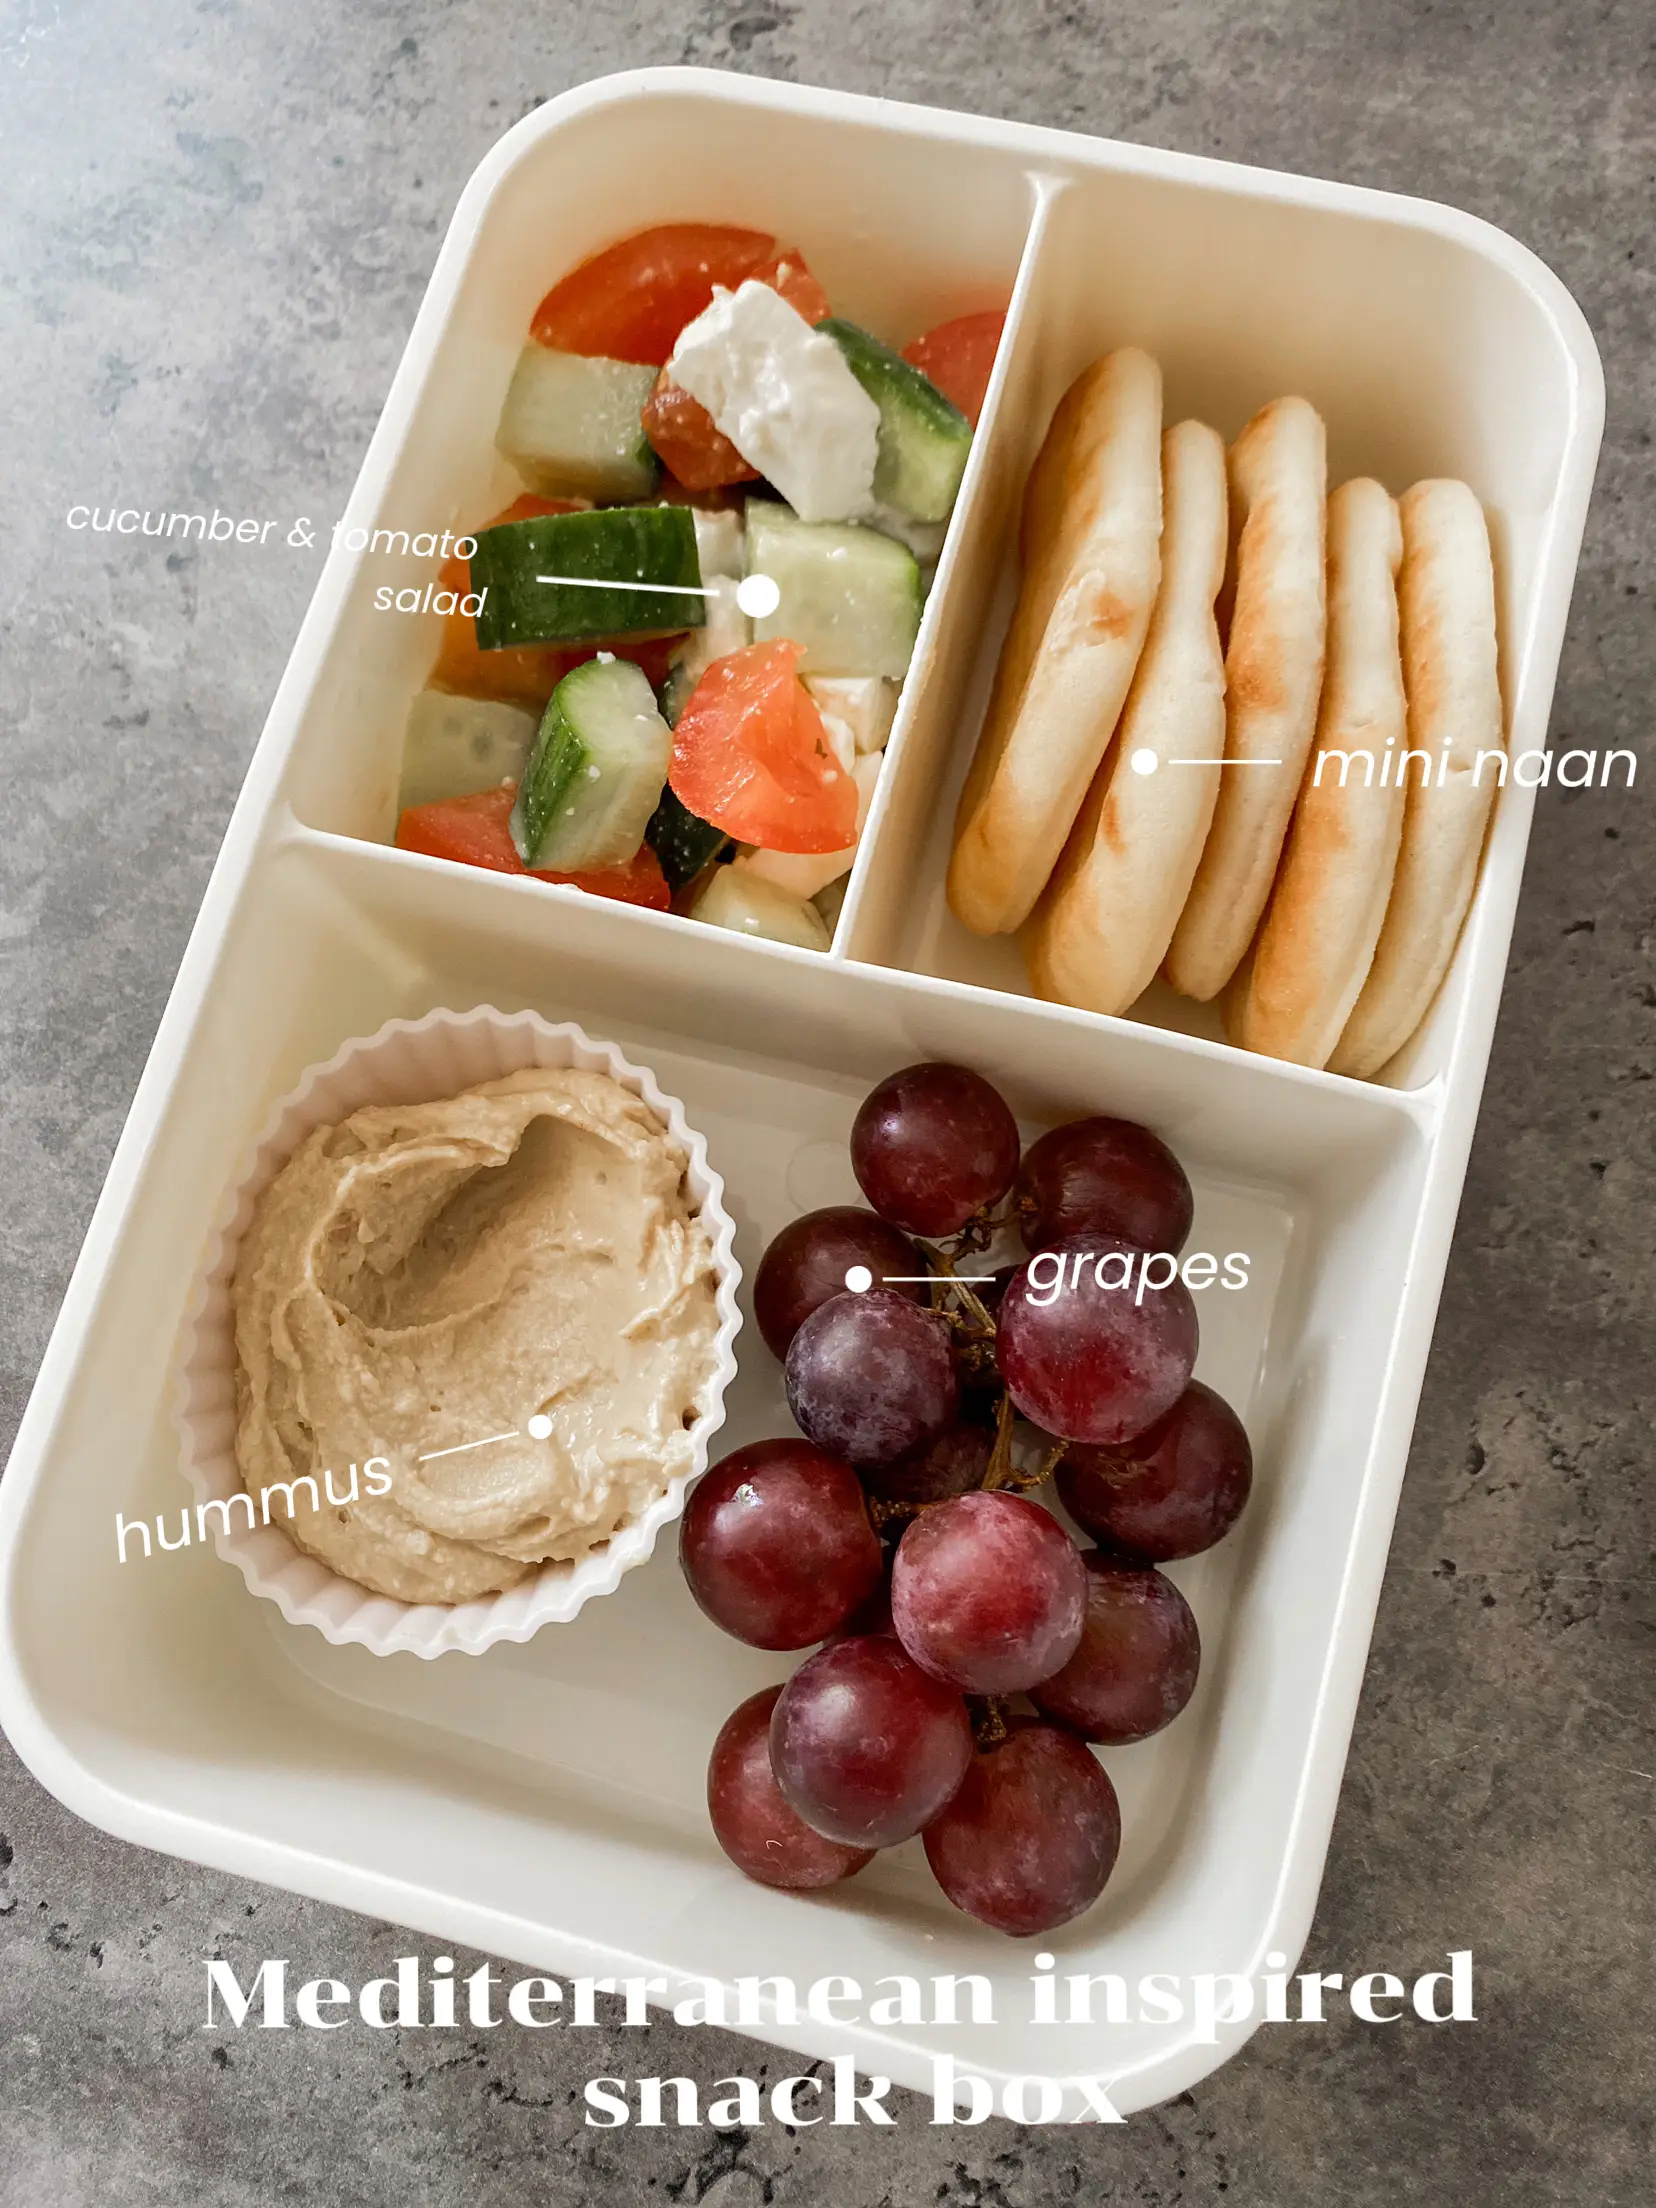 Snack Lunch Bento Box - Fully Mediterranean